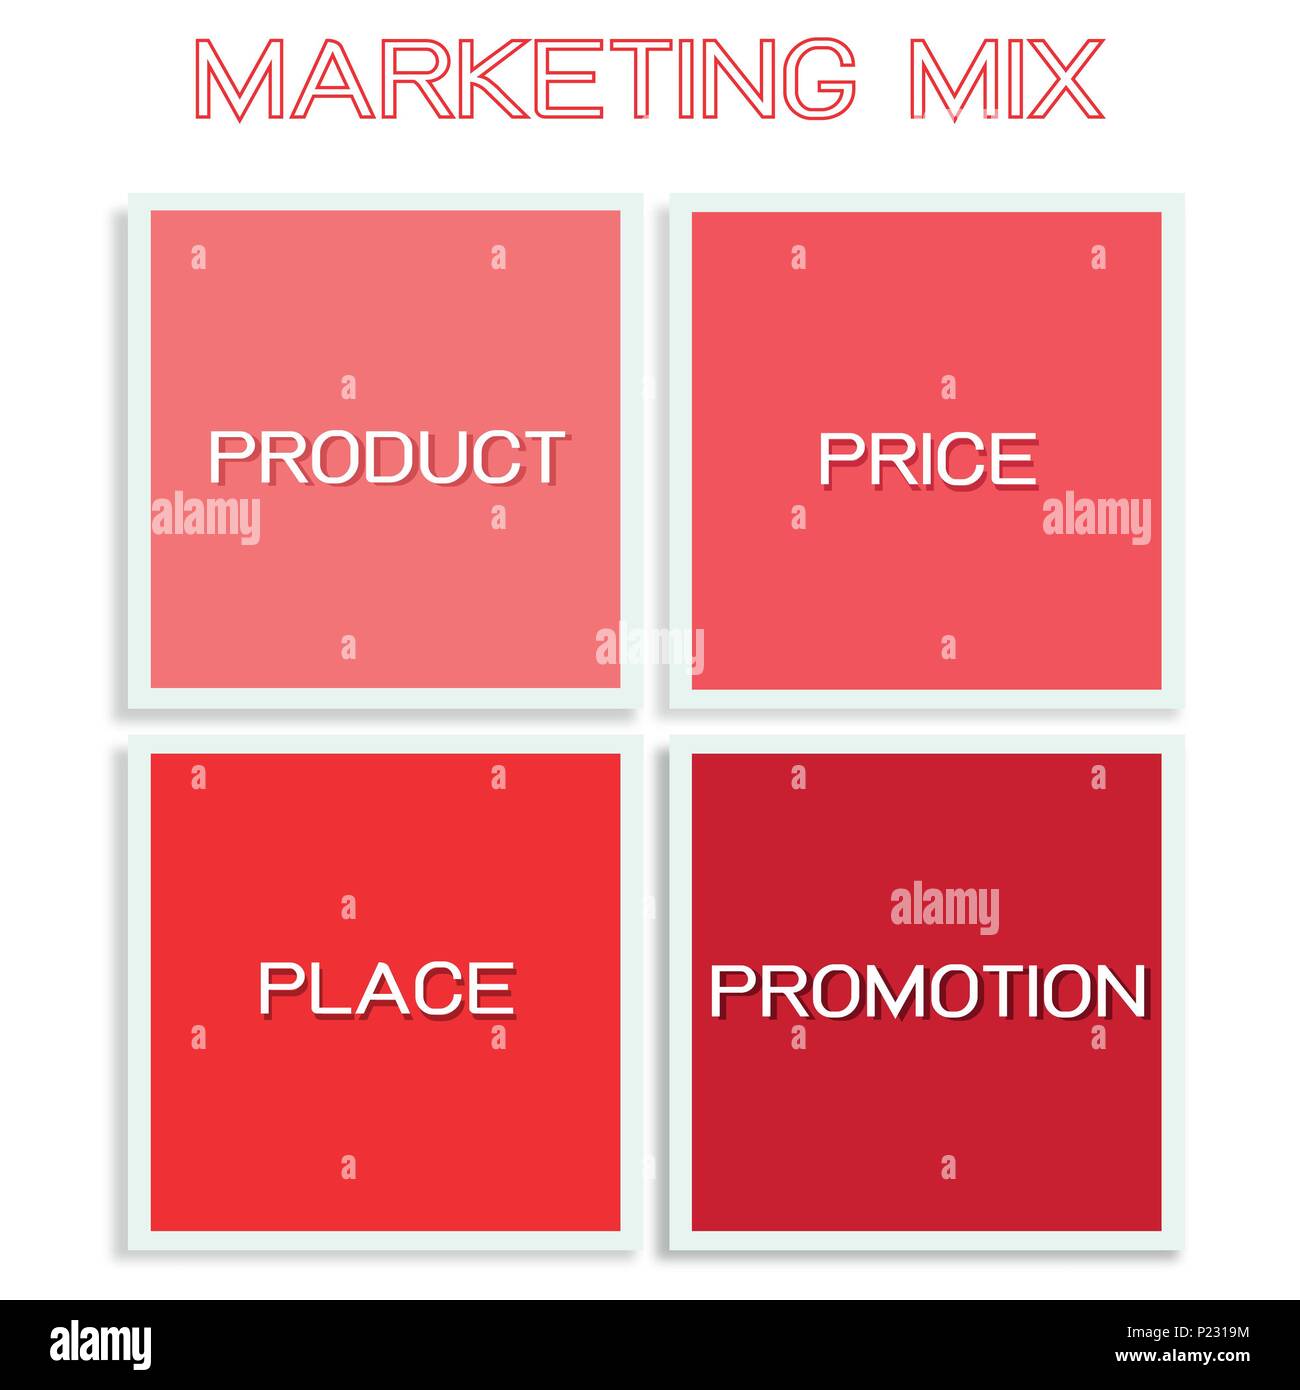 4 P S Of Marketing Chart